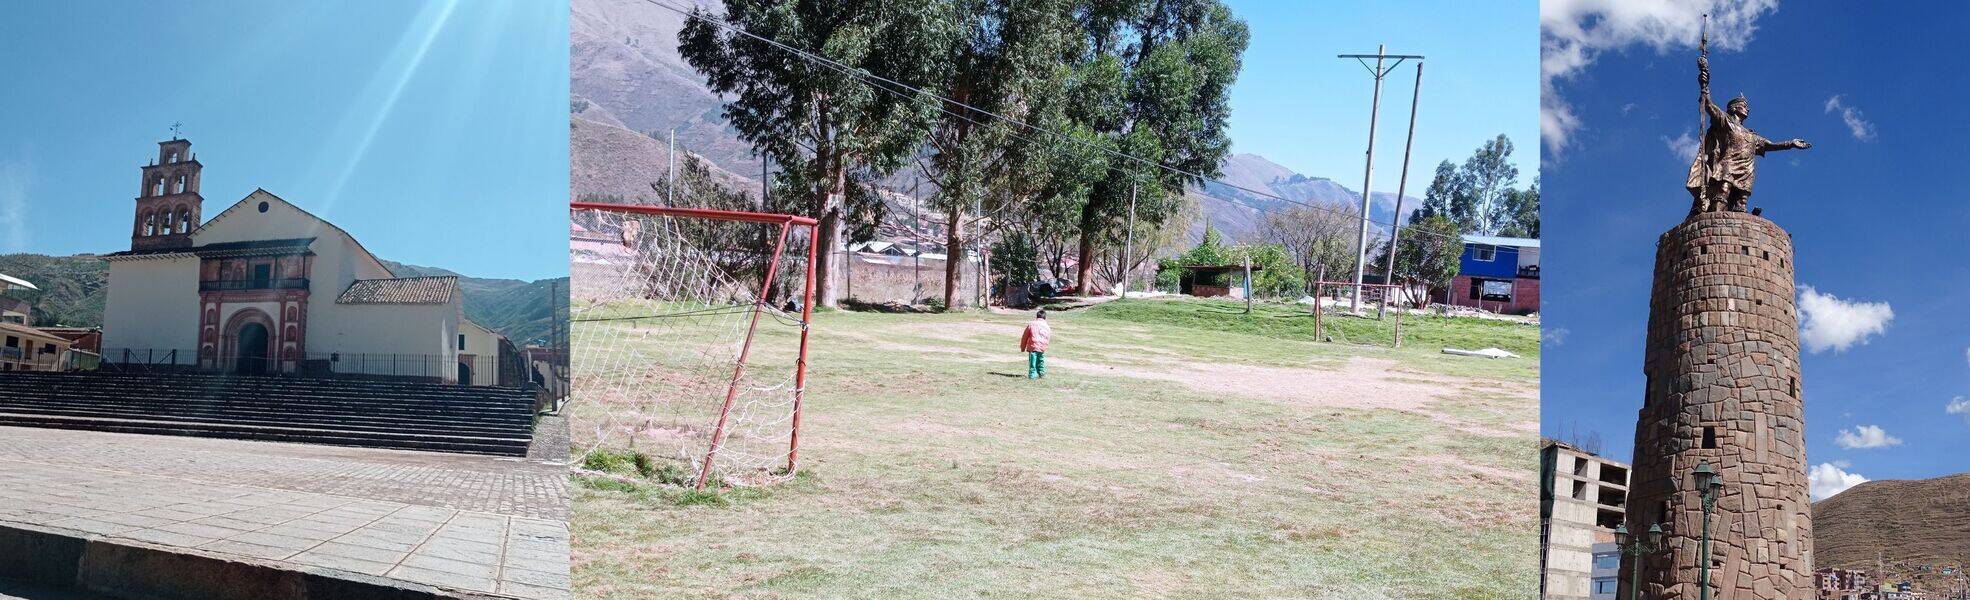 Field report from the Children Center in Cusco